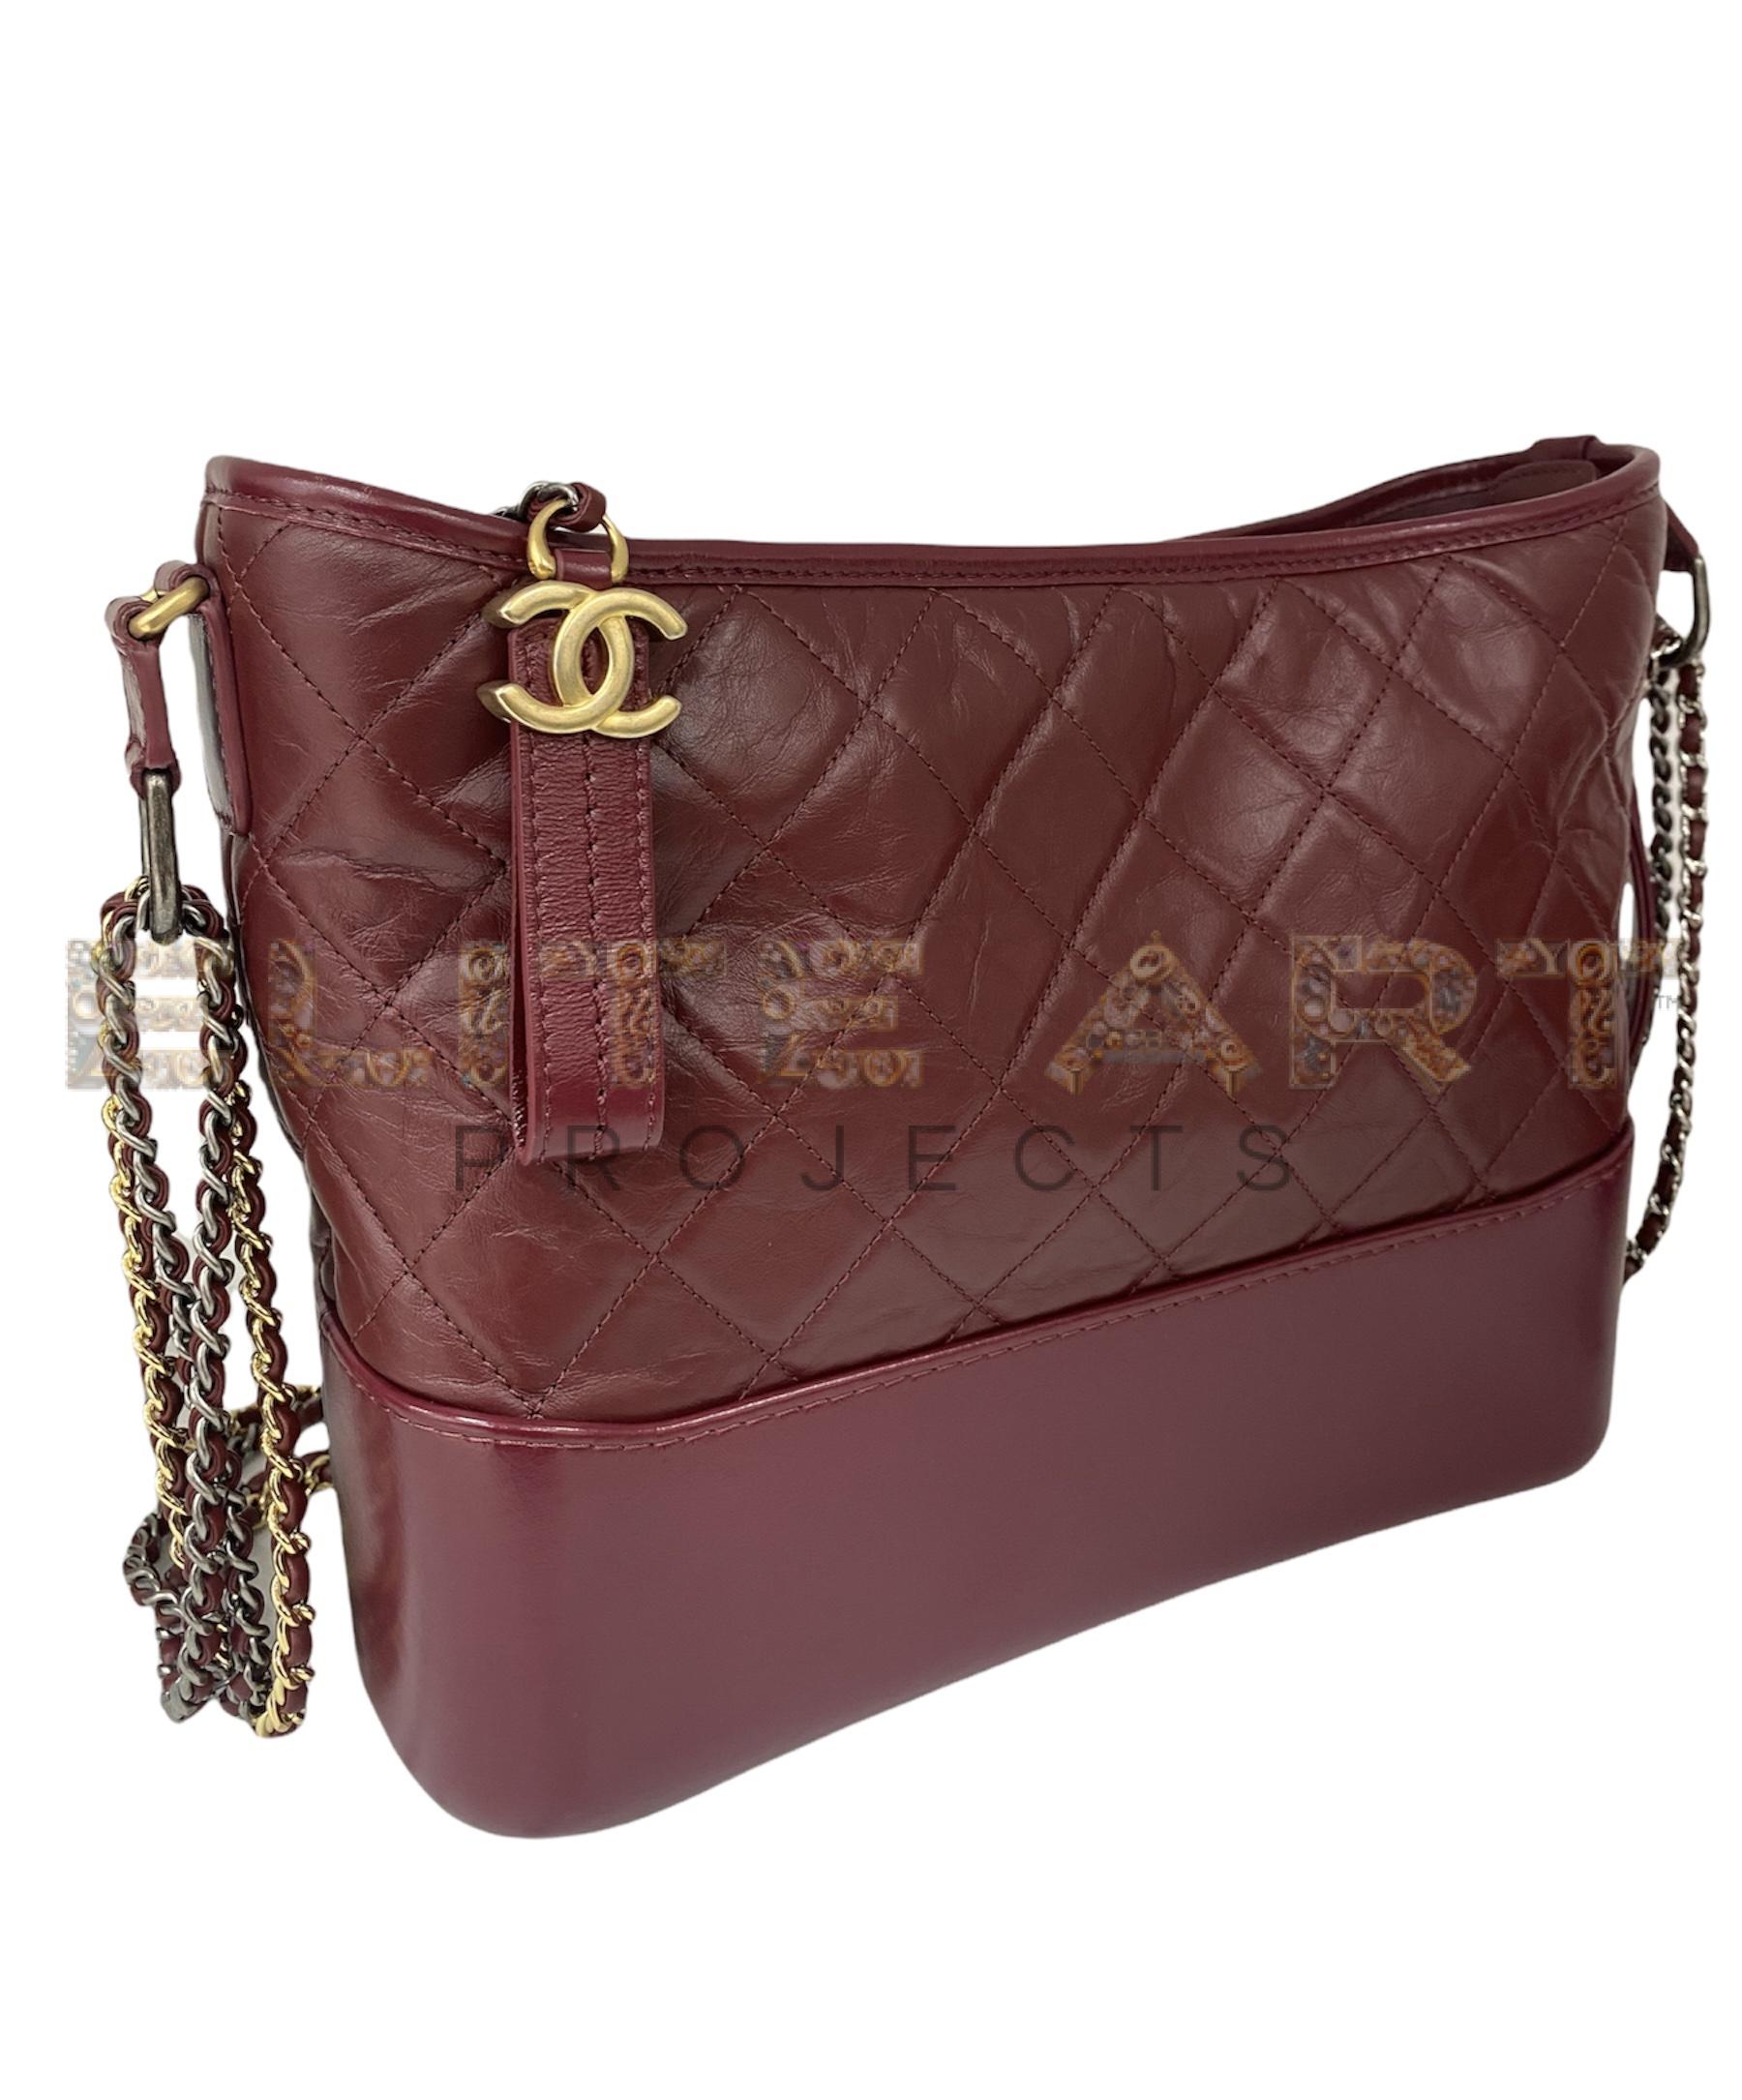 Chanel, Gabrielle bag, burgundy leather, silver hardware, gold hardware, spacious interior, shoulder strap